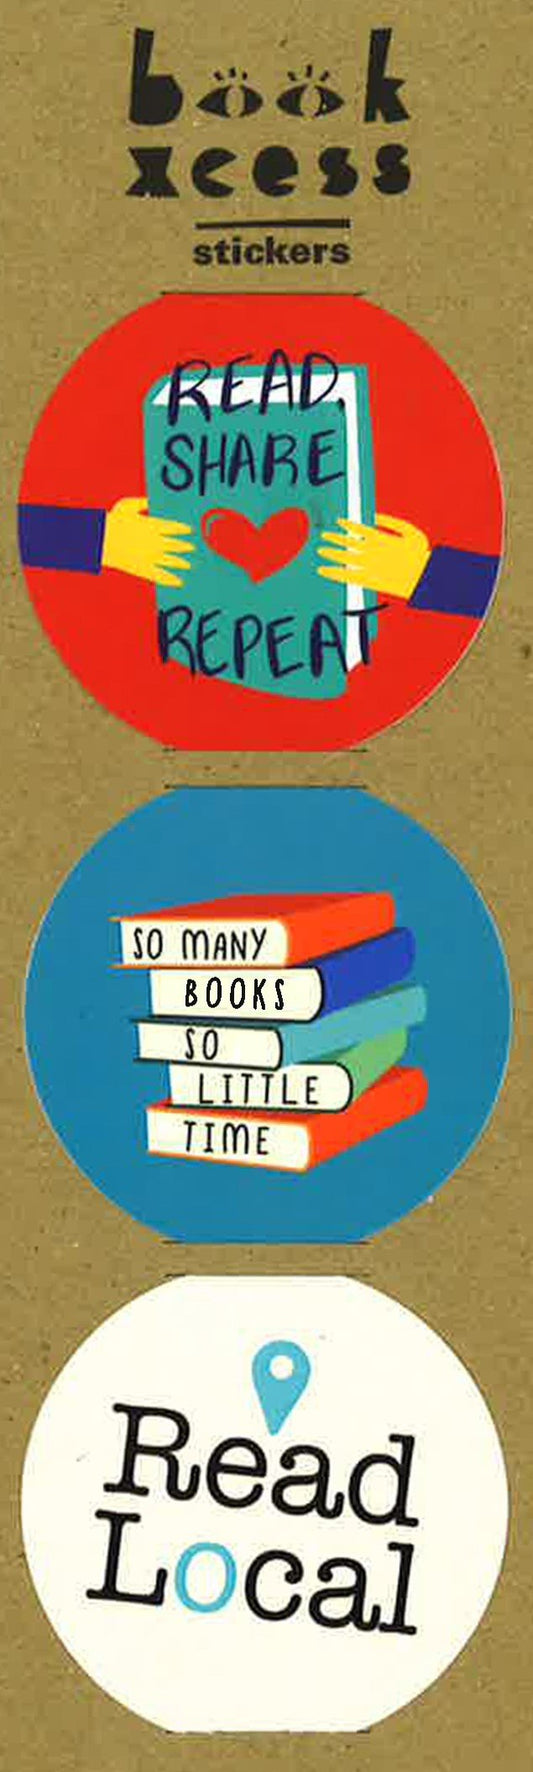 The Bookworm (Sticker Badges)